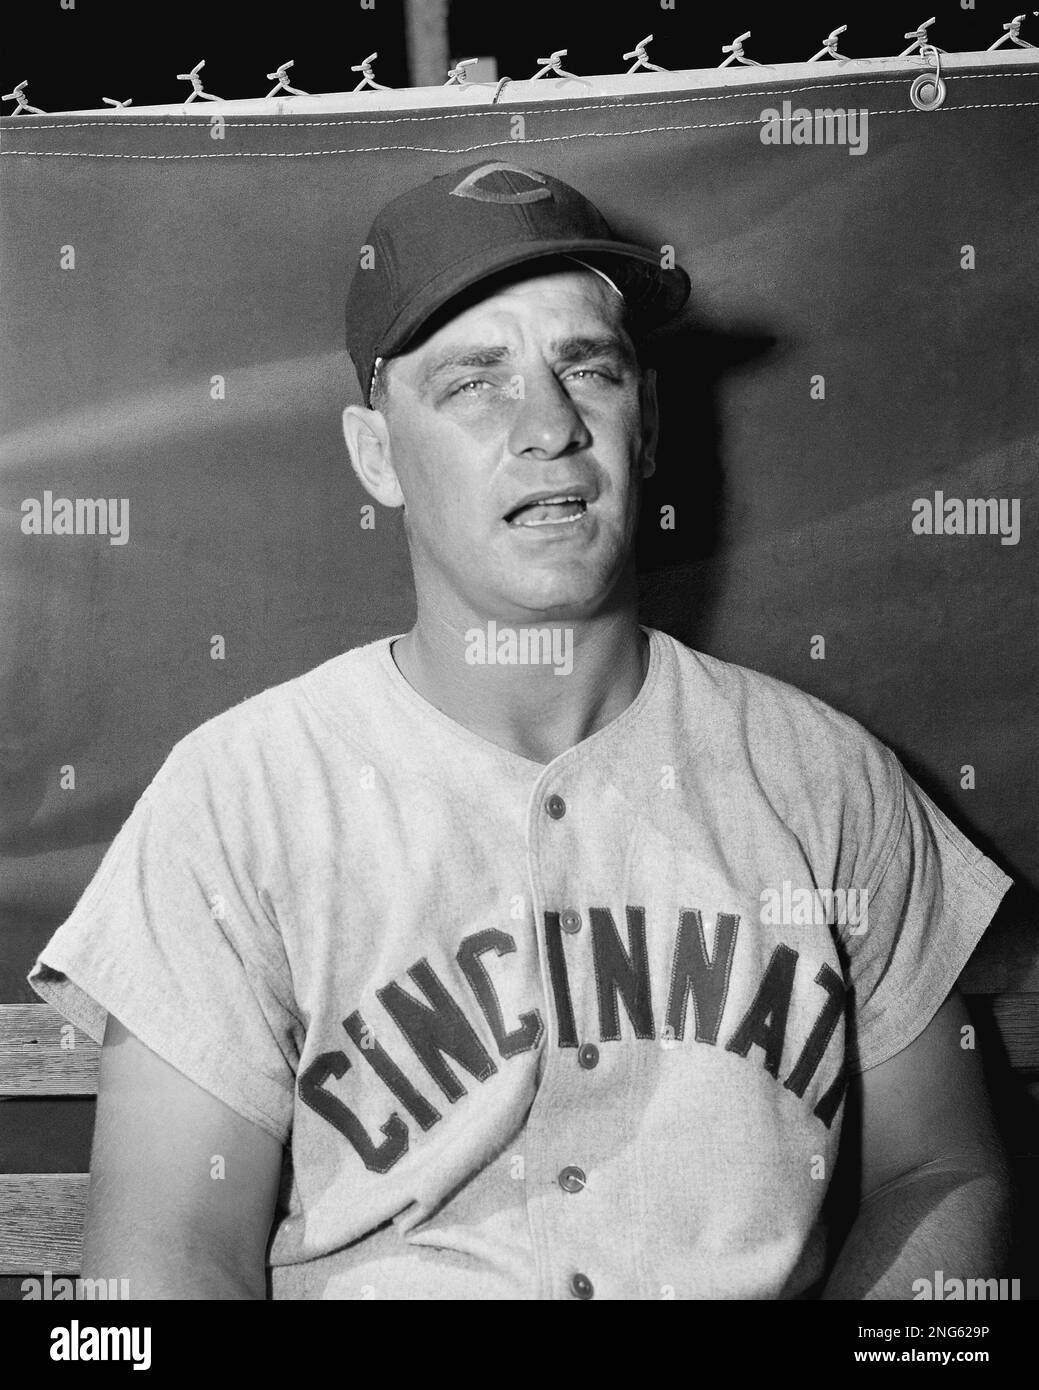 Ted Kluszewski infielder for the Cincinnati Reds, March 1, 1953 in